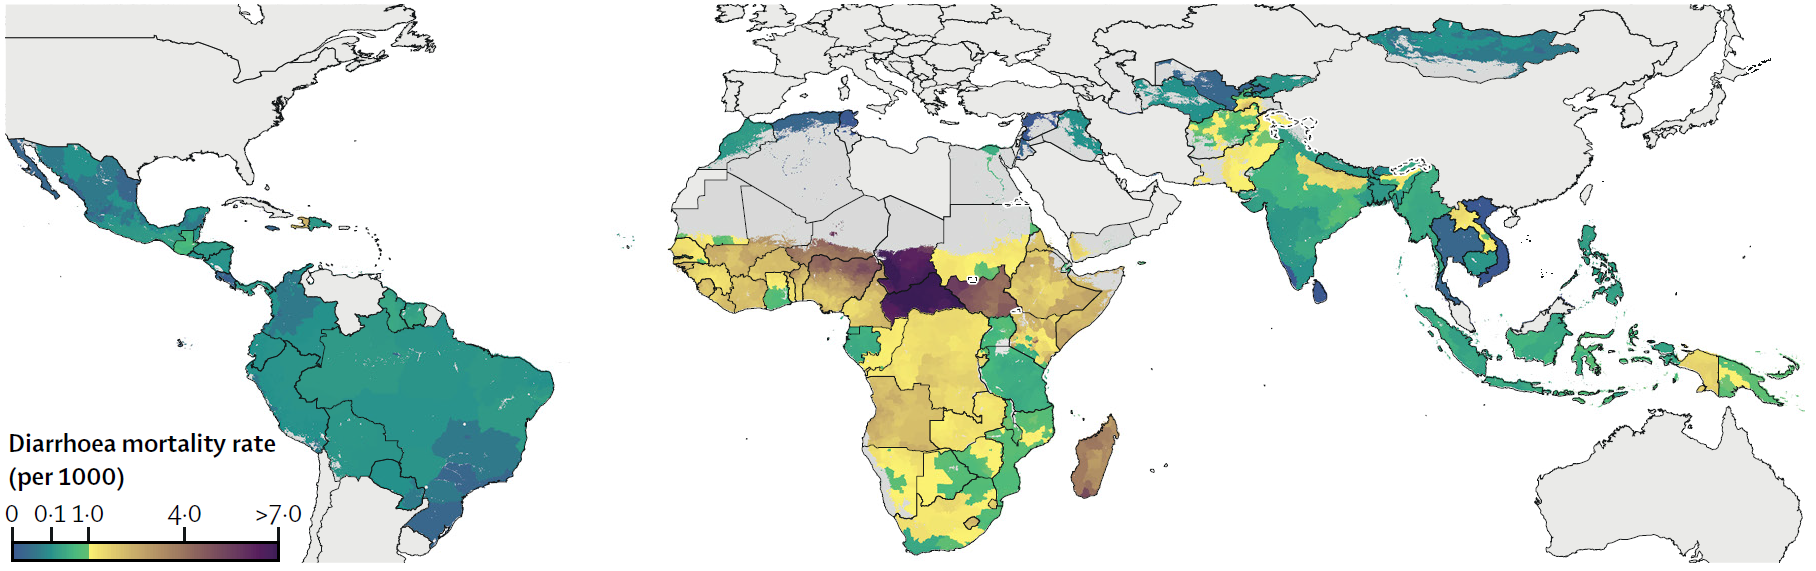 Heat map geographic variation of diarrhea burden